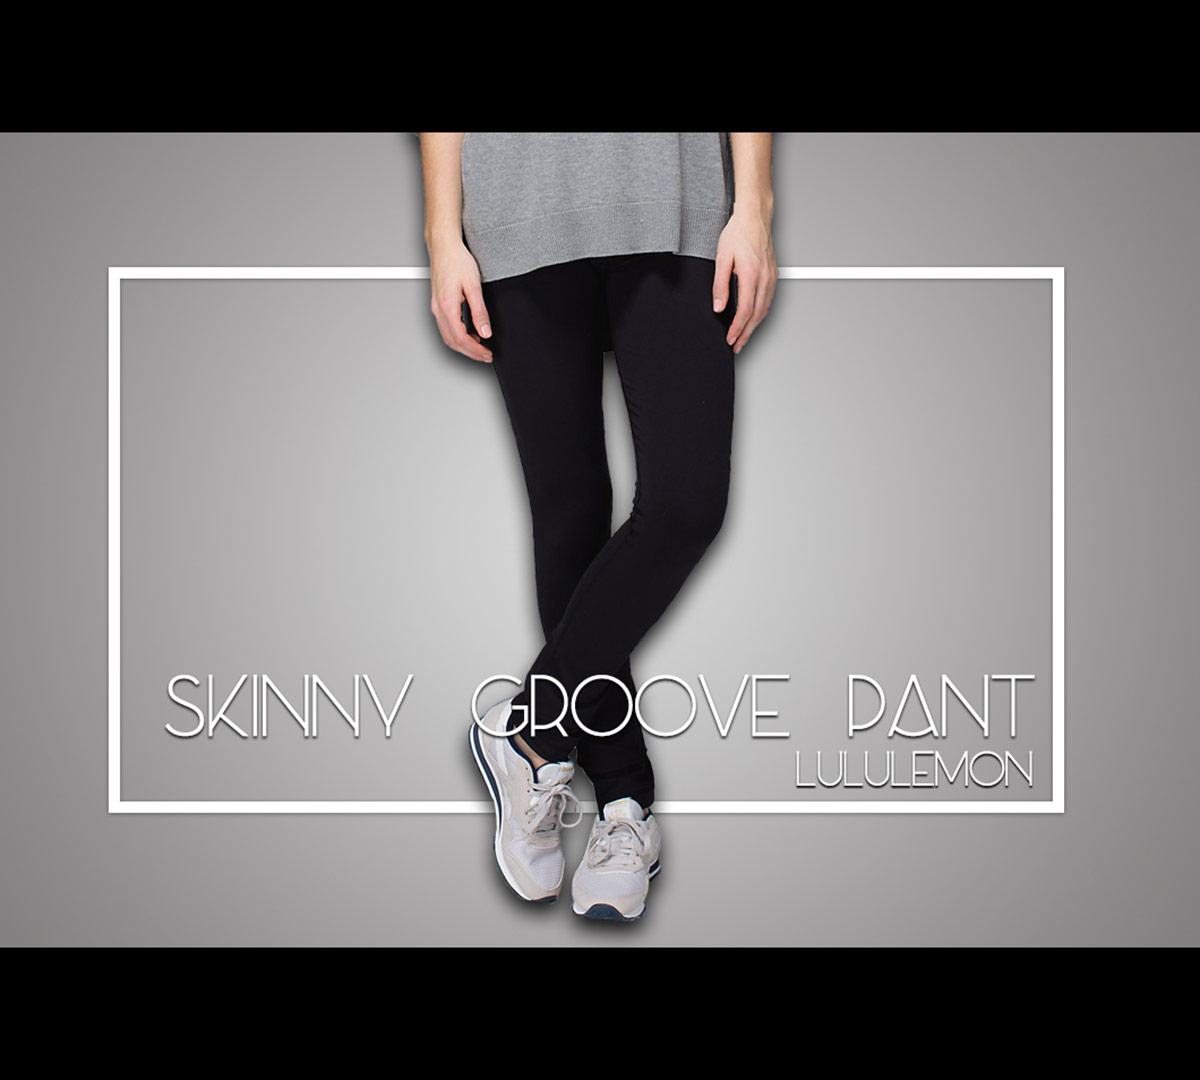 lululemon Skinny Groove Pant Review